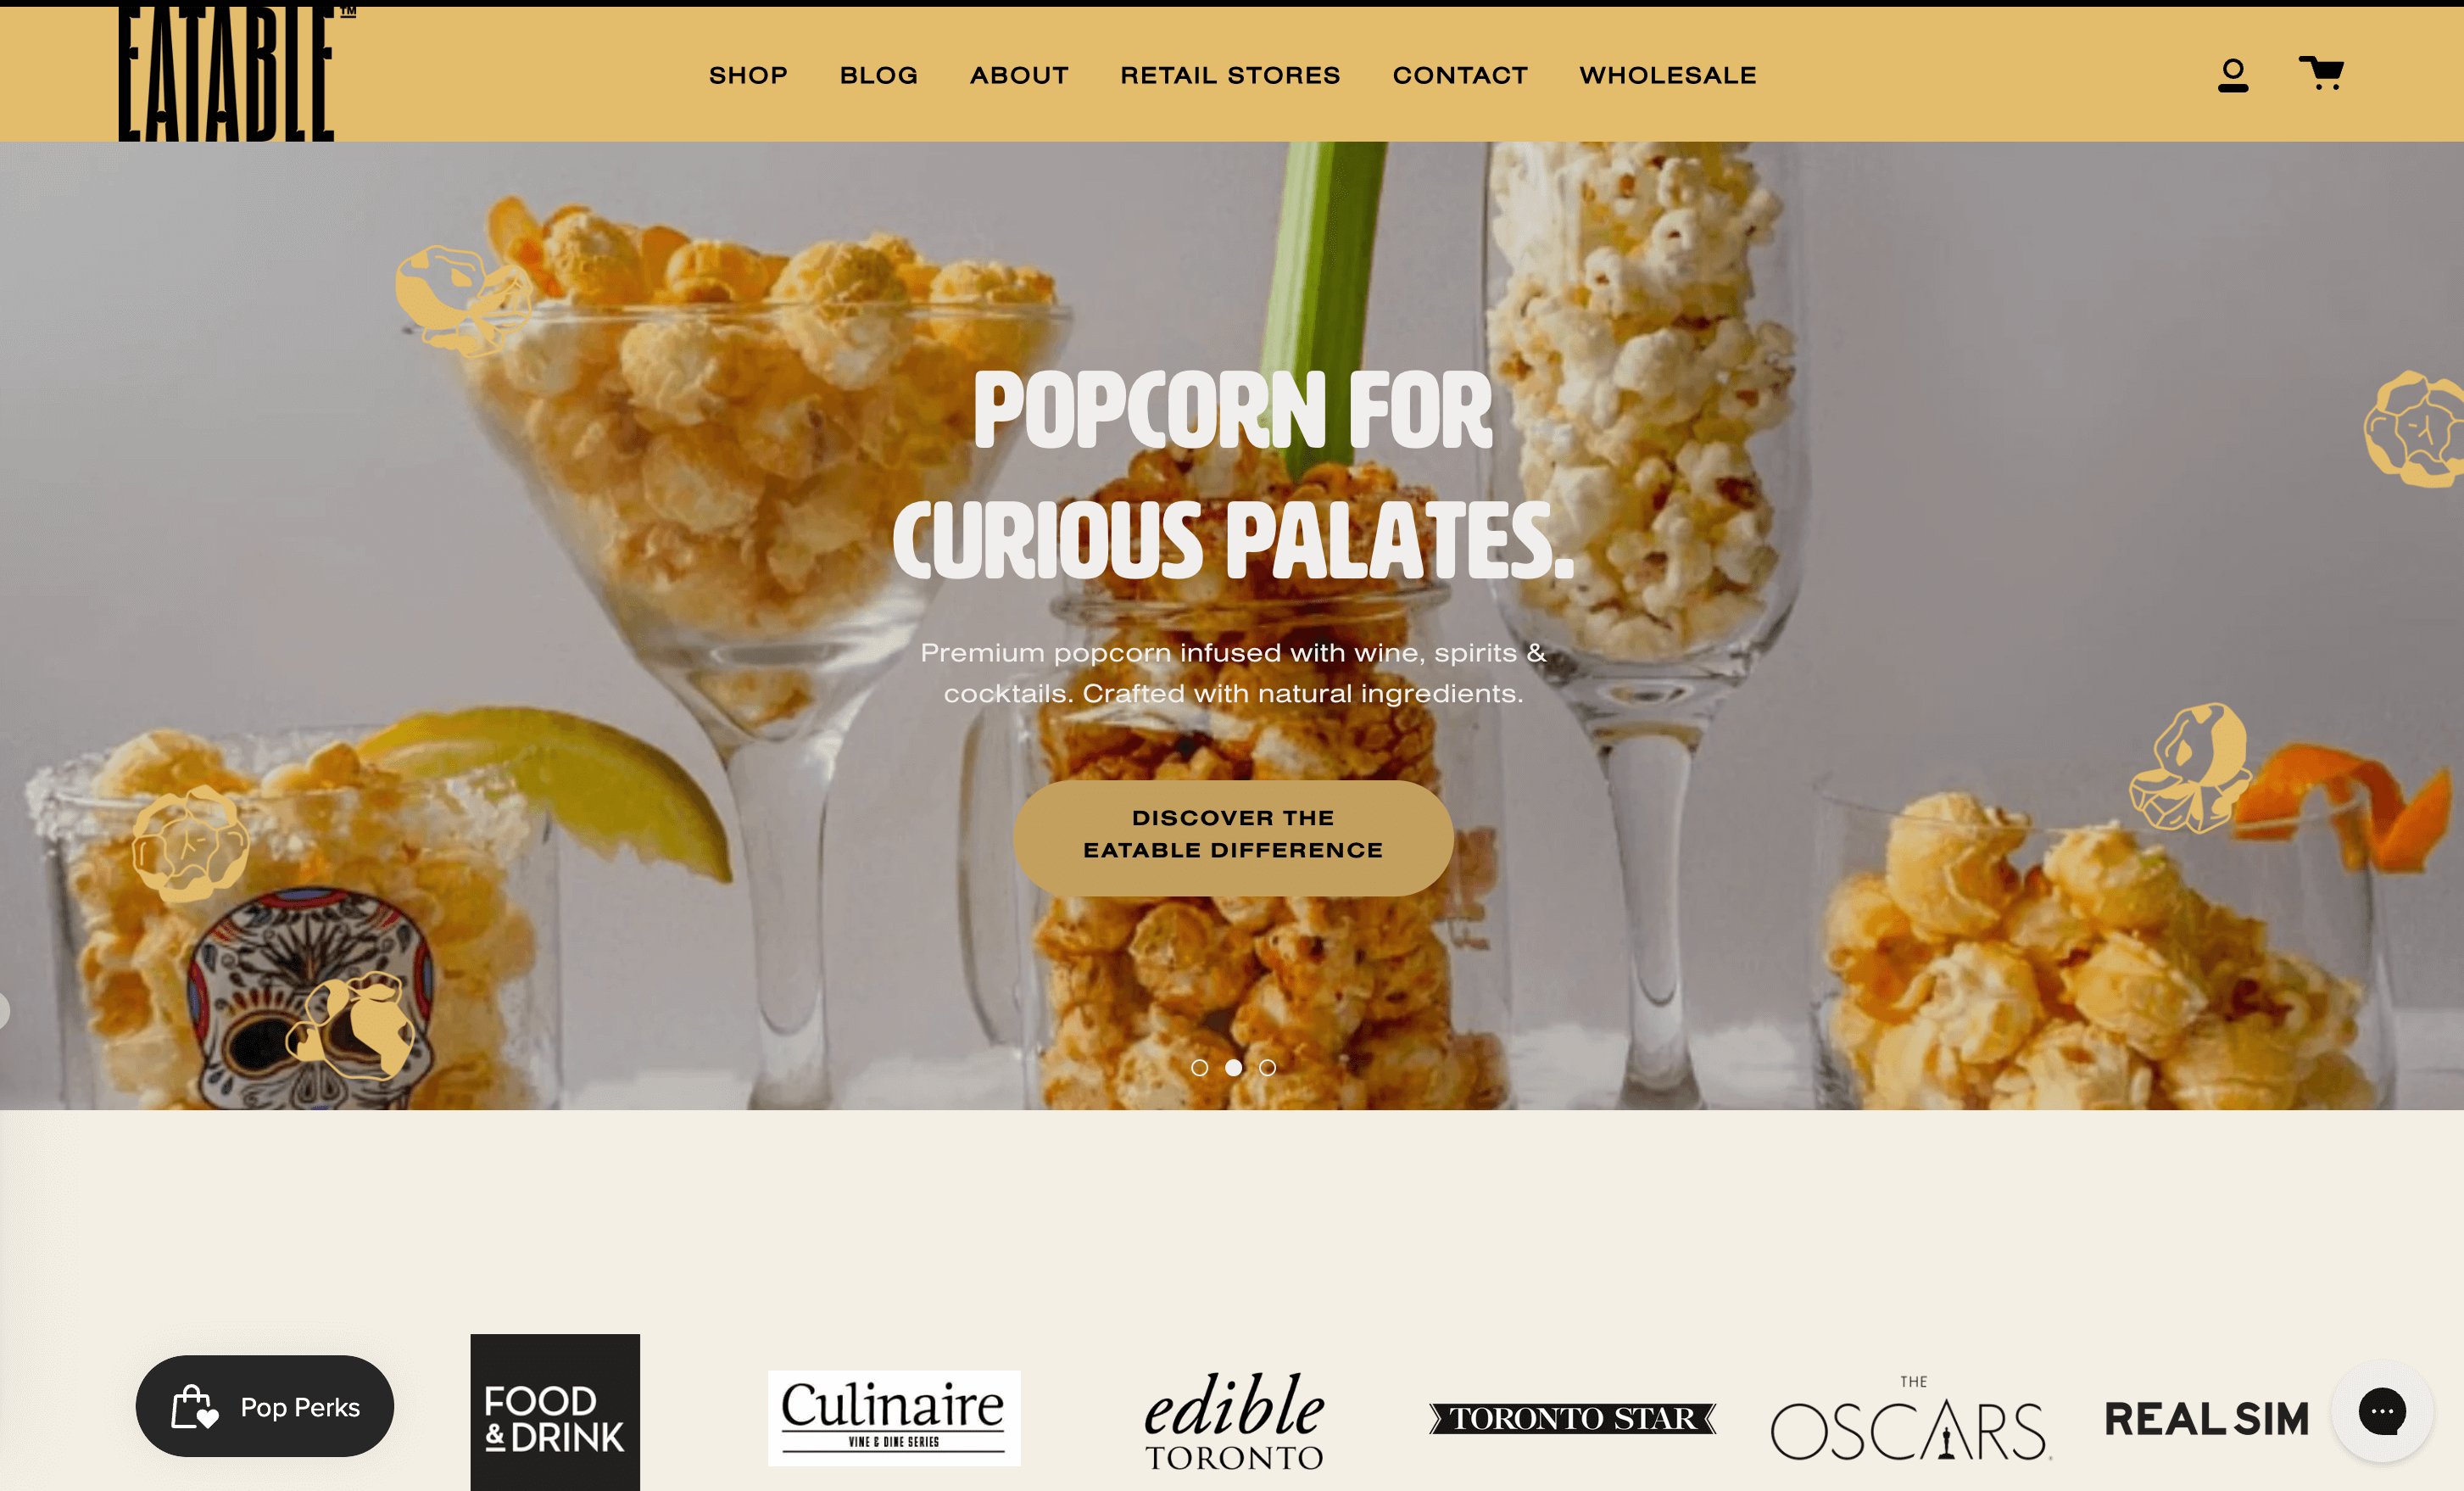 EATABLE 主页的屏幕截图显示了装满爆米花的酒精杯的图像。标题是“为好奇的口味爆米花”。